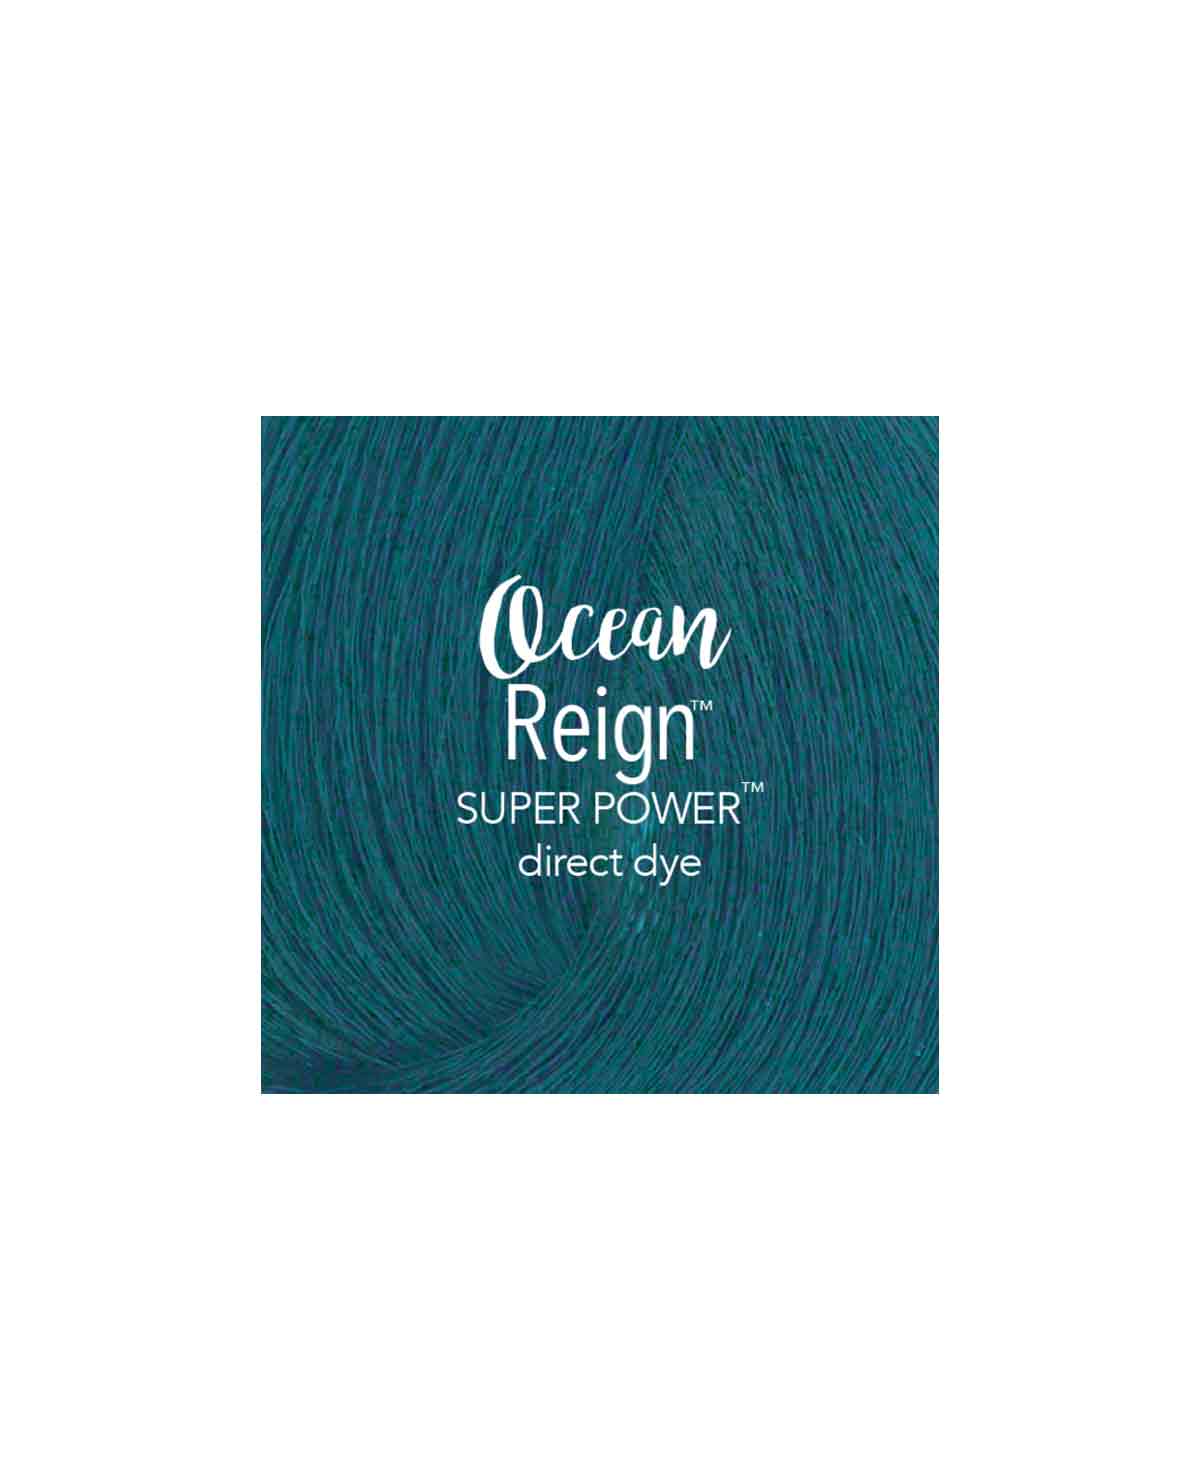 Mydentity - Ocean Reign 